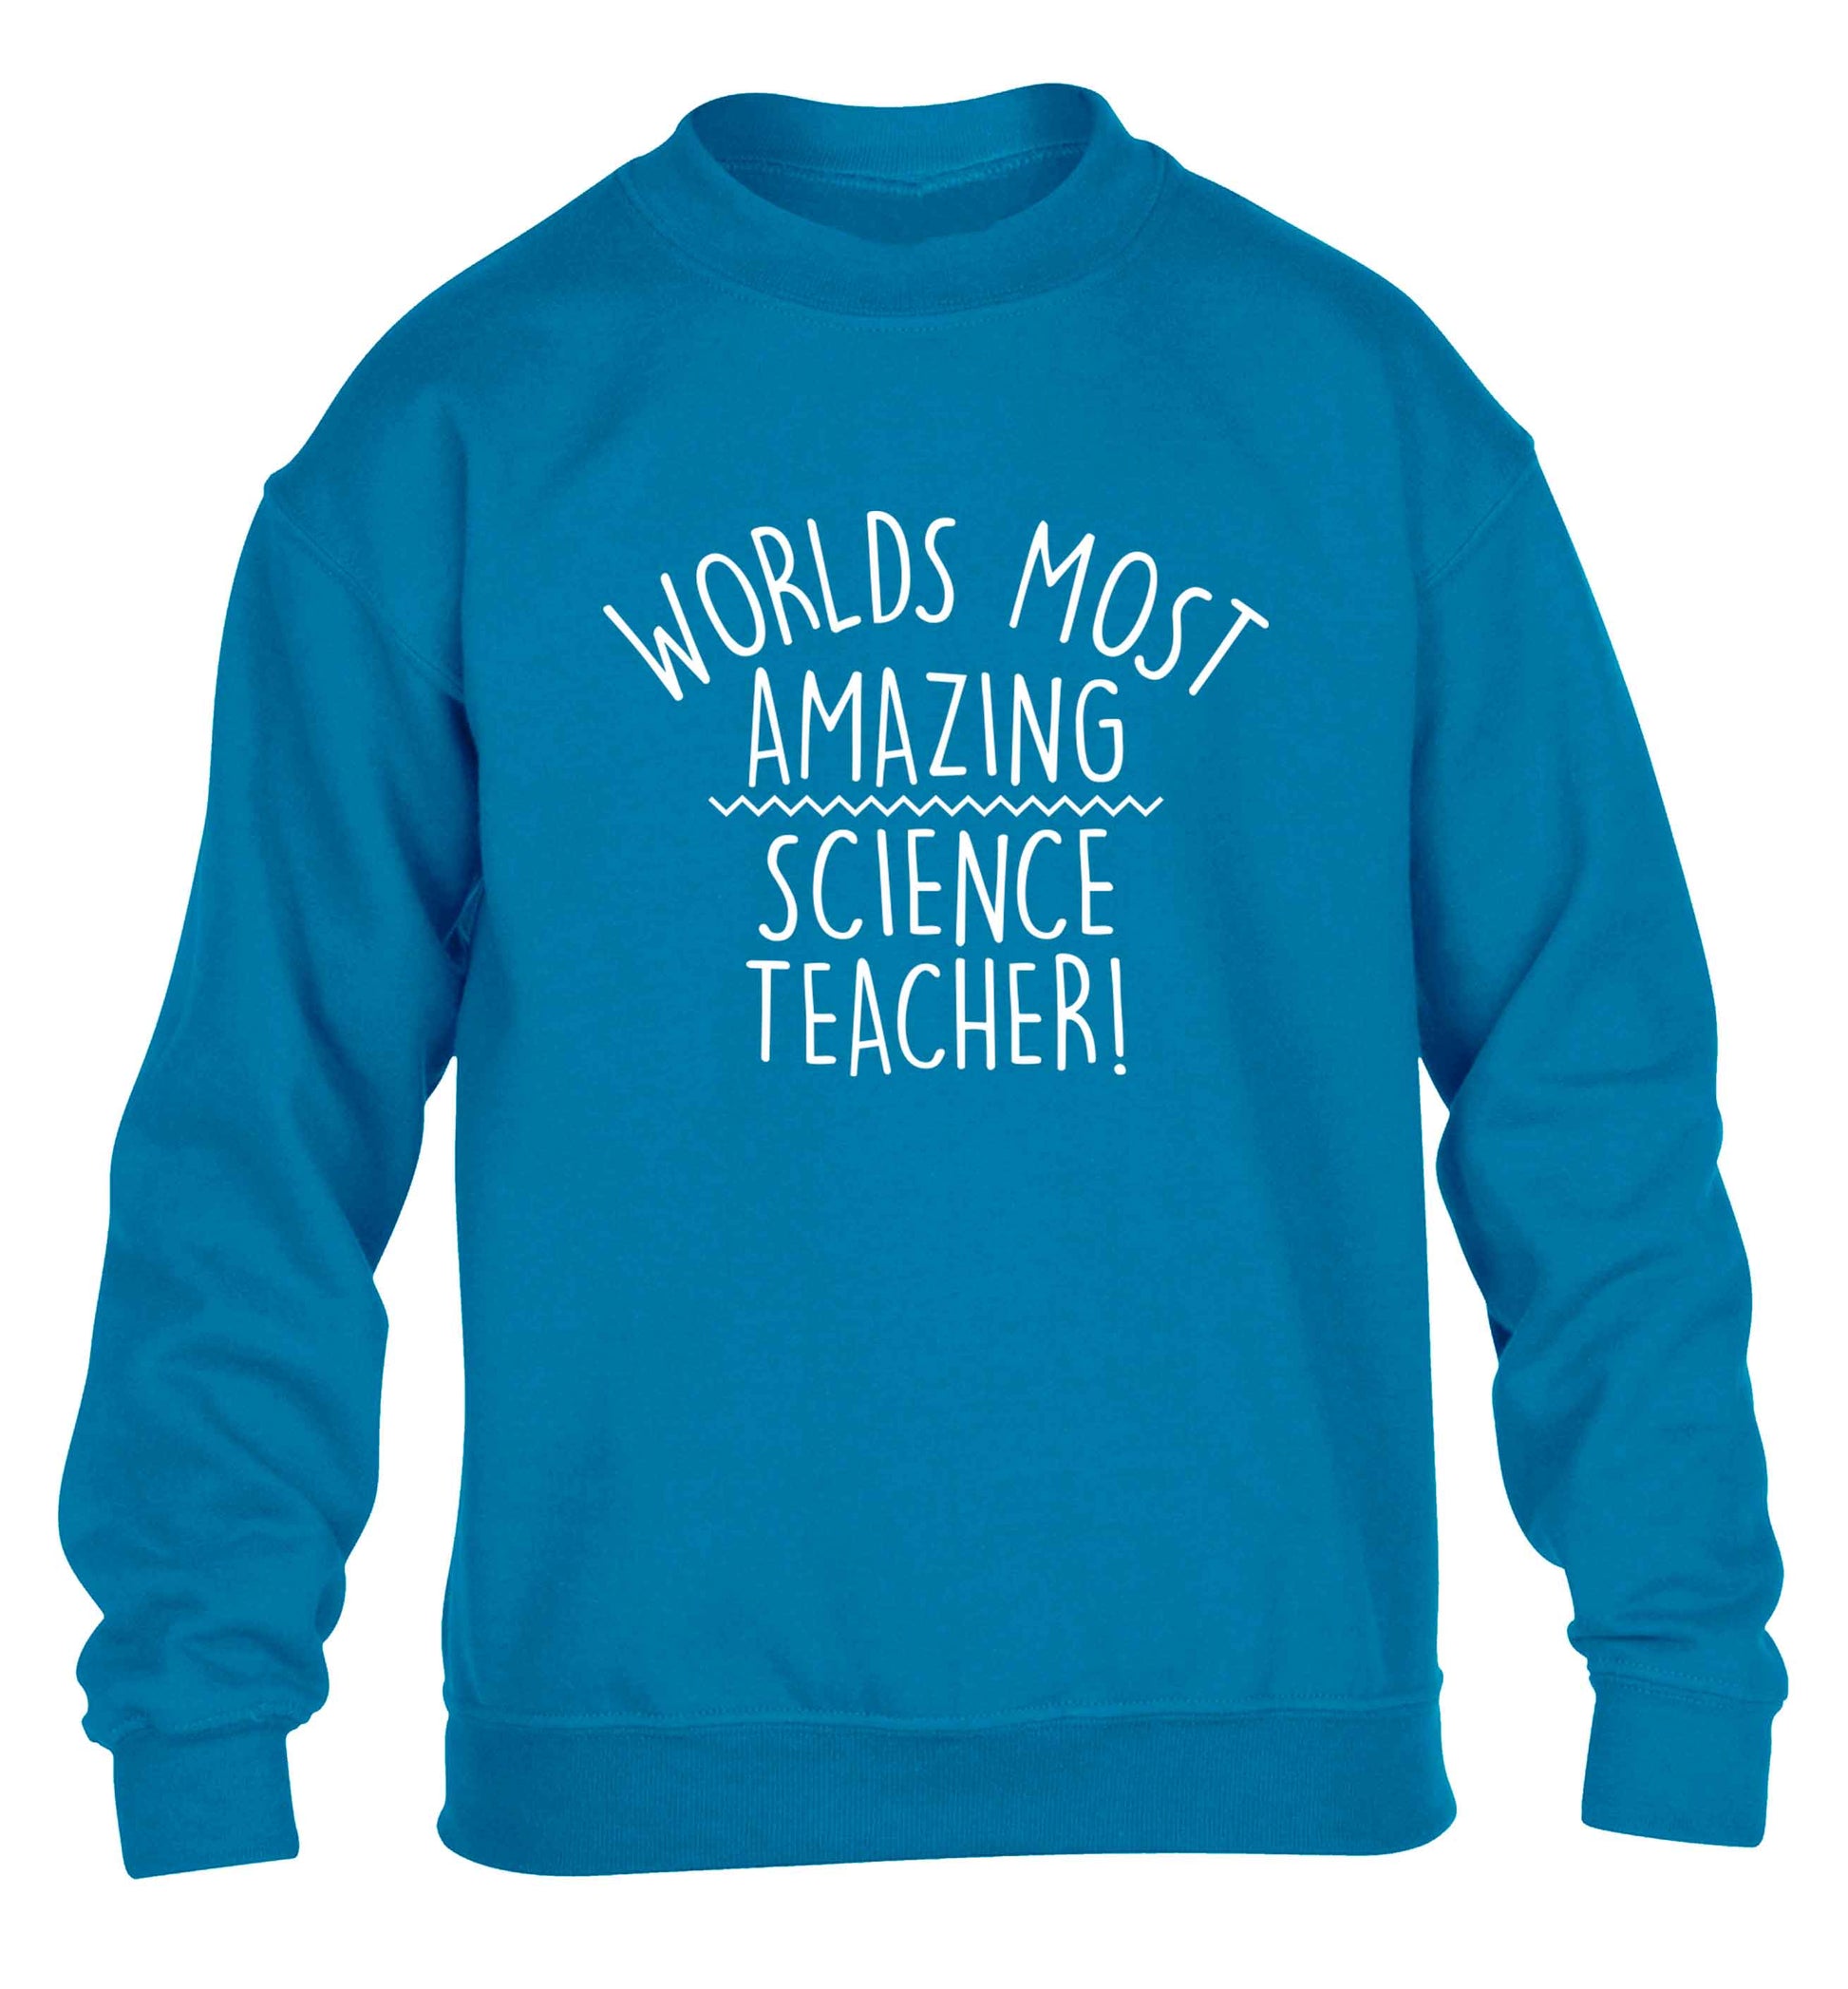 Worlds most amazing science teacher children's blue sweater 12-13 Years